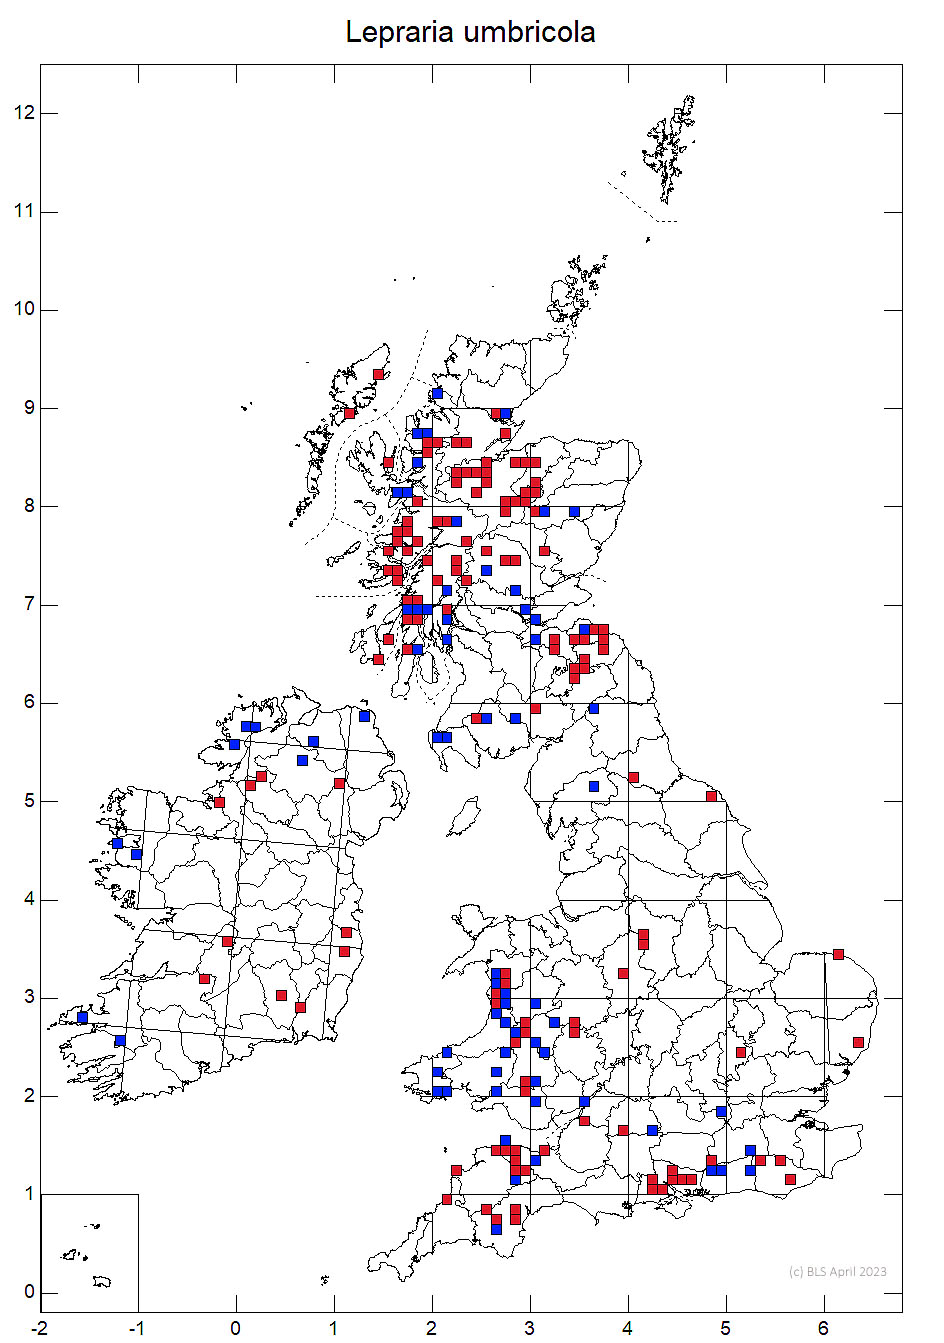 Lepraria umbricola 10km sq distribution map